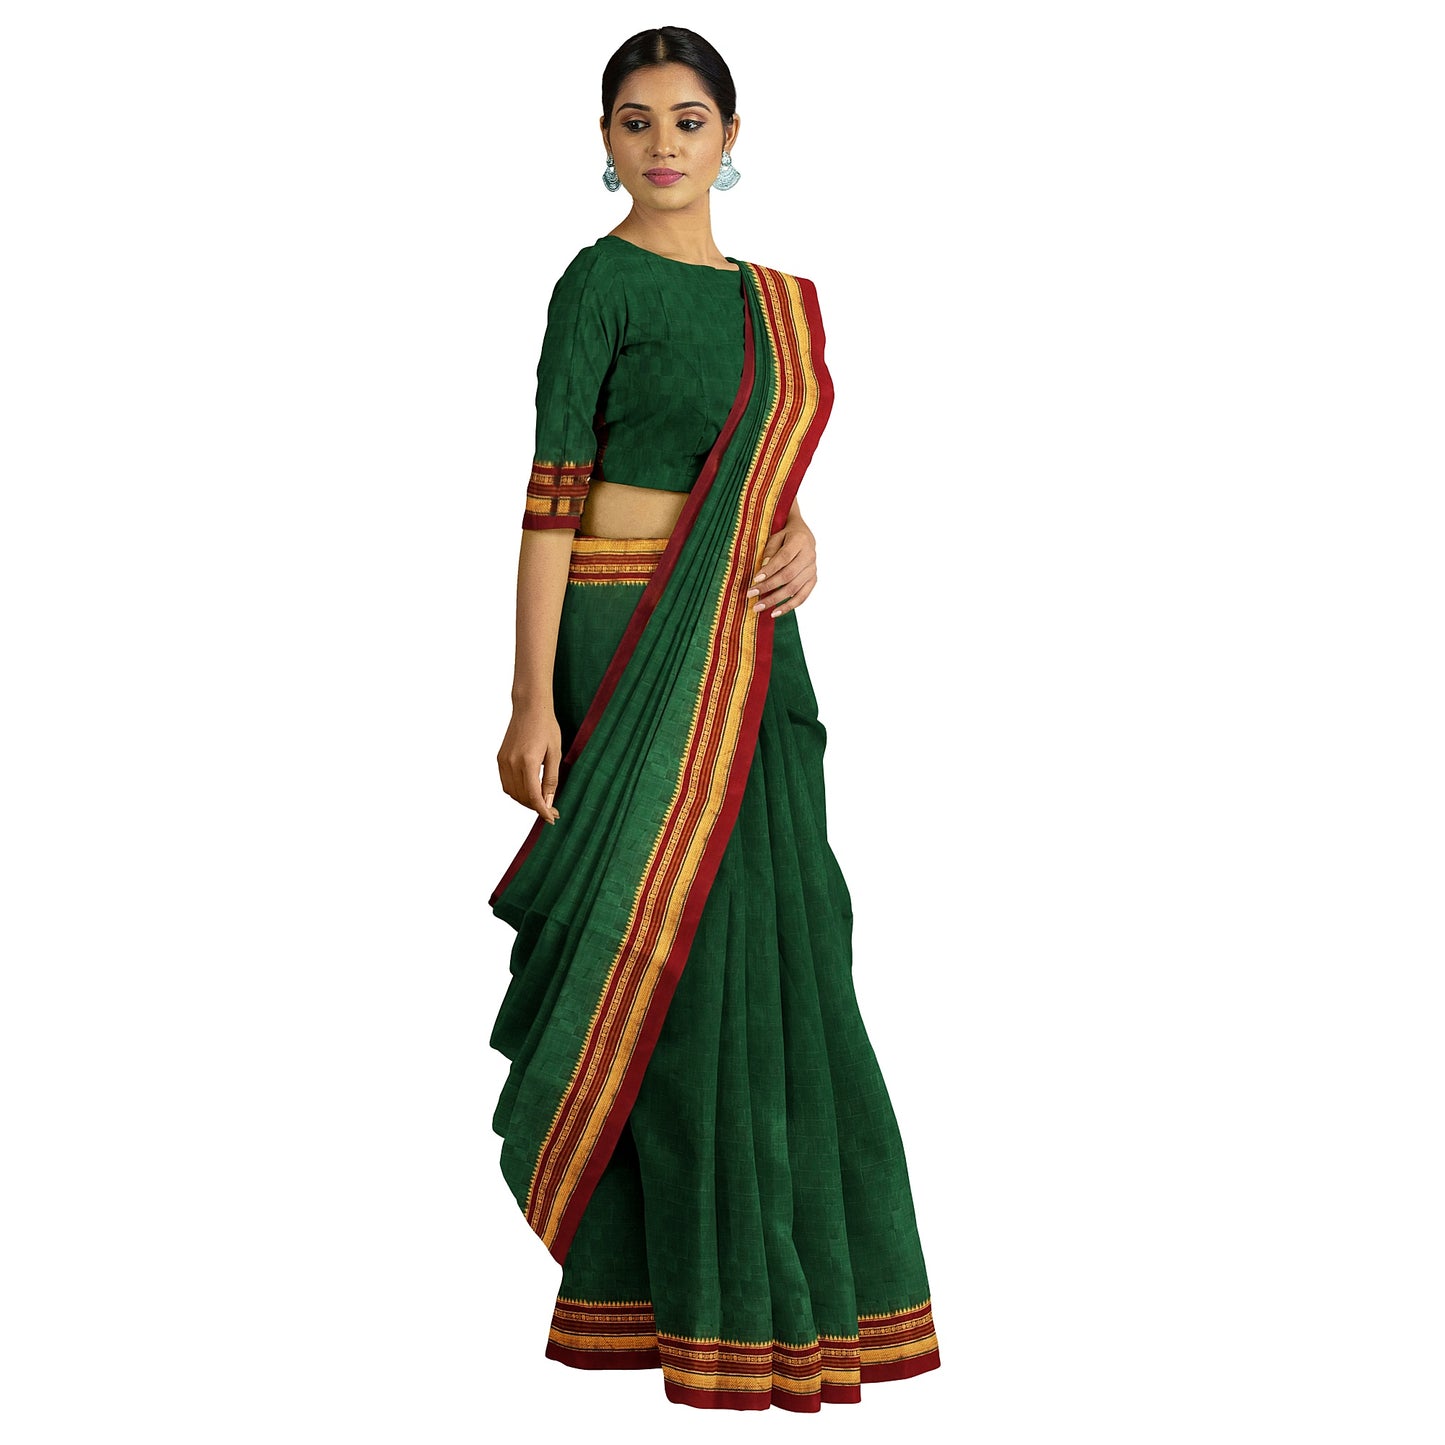 Ambuja Soft Mercerized Cotton saree - Dark Green with Maroon border